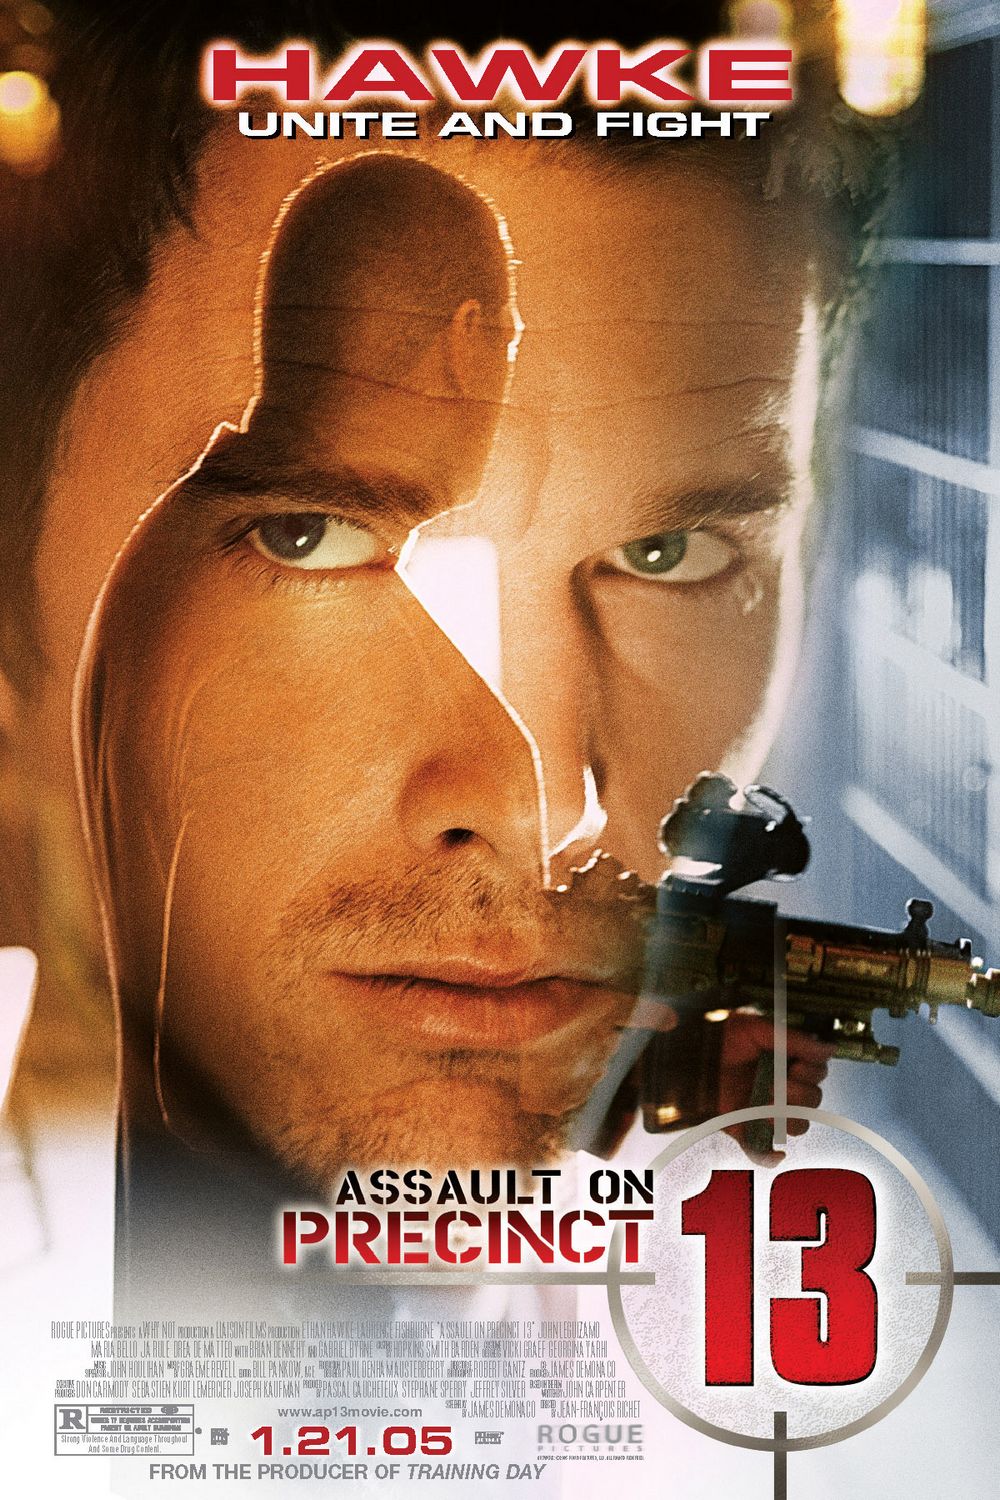 Assault on Precinct 7 movie download in mp4